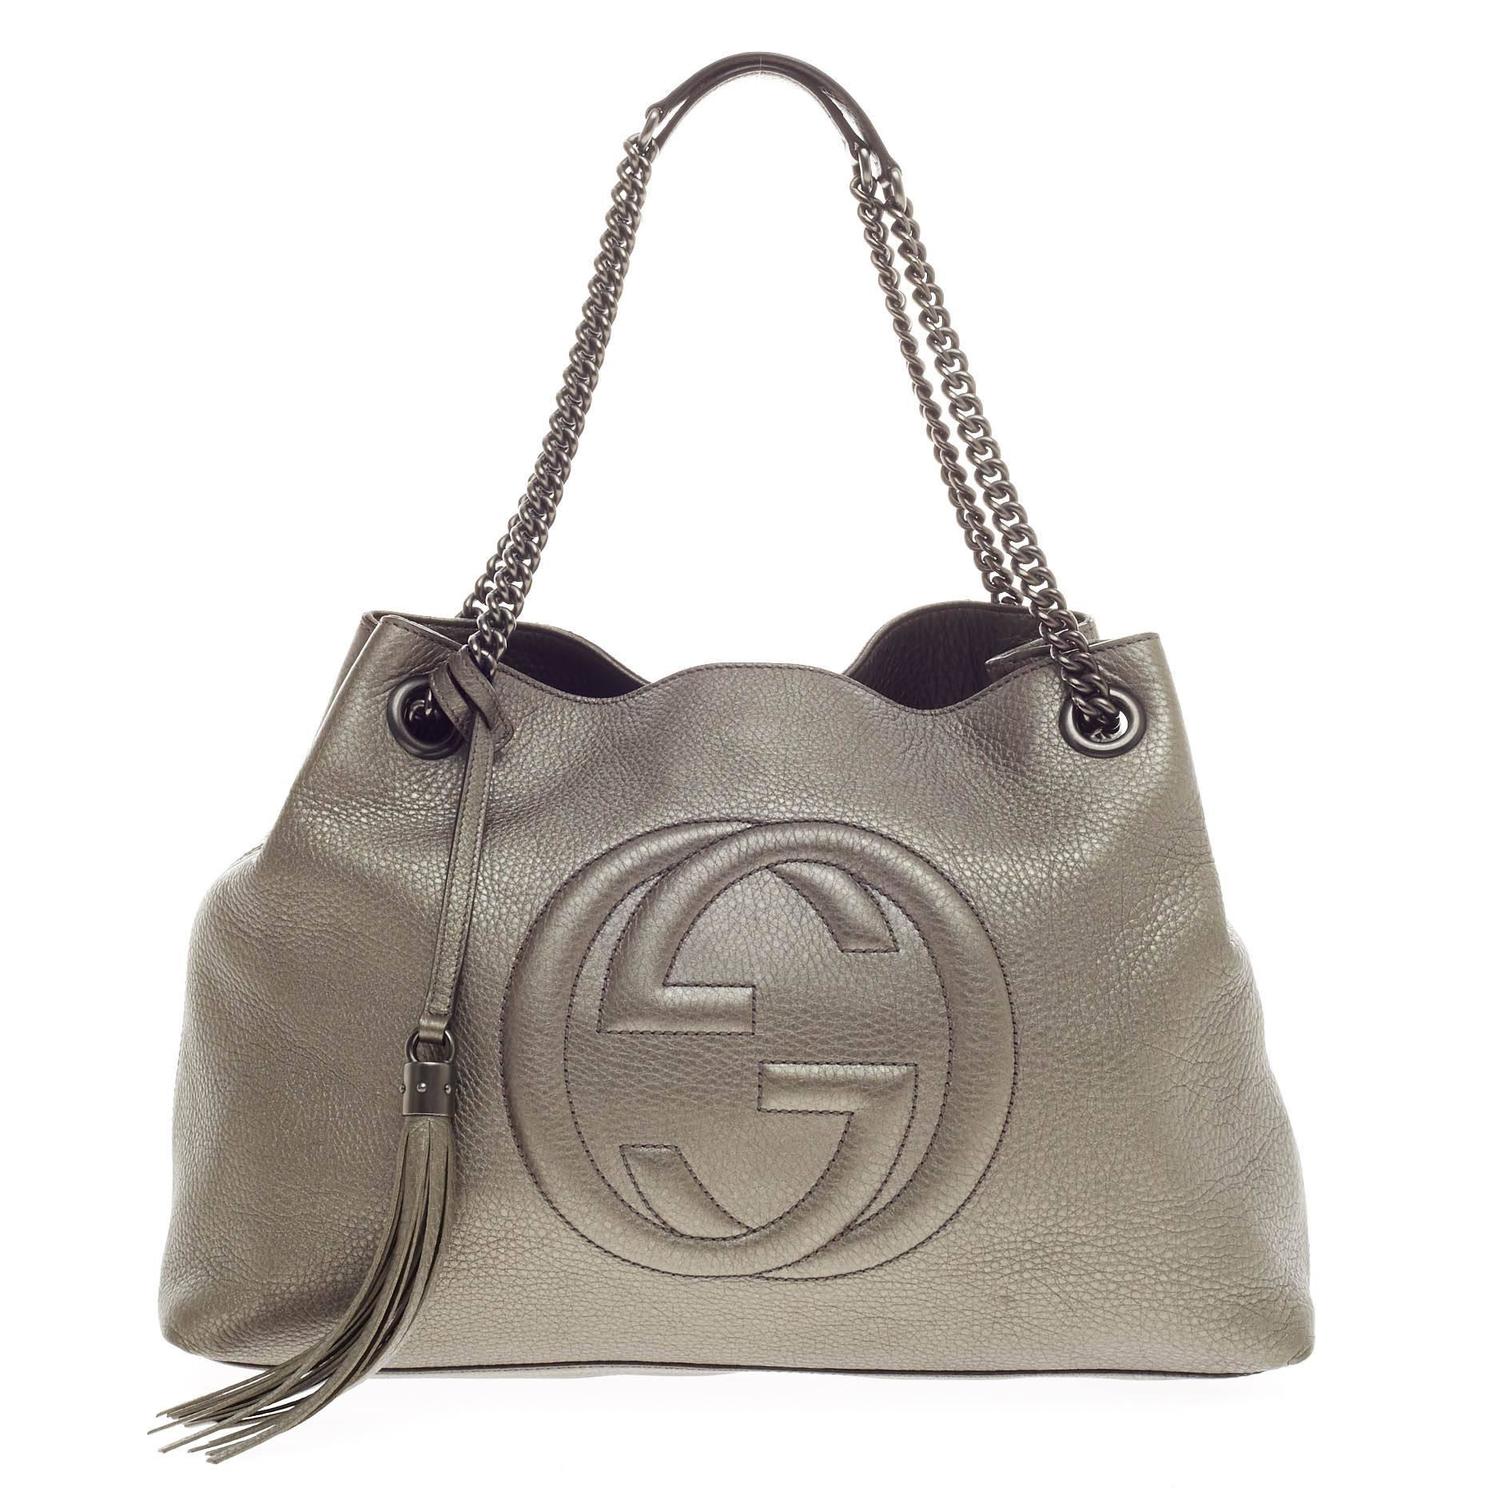 Gucci Shoulder Bag With Chain | NAR Media Kit